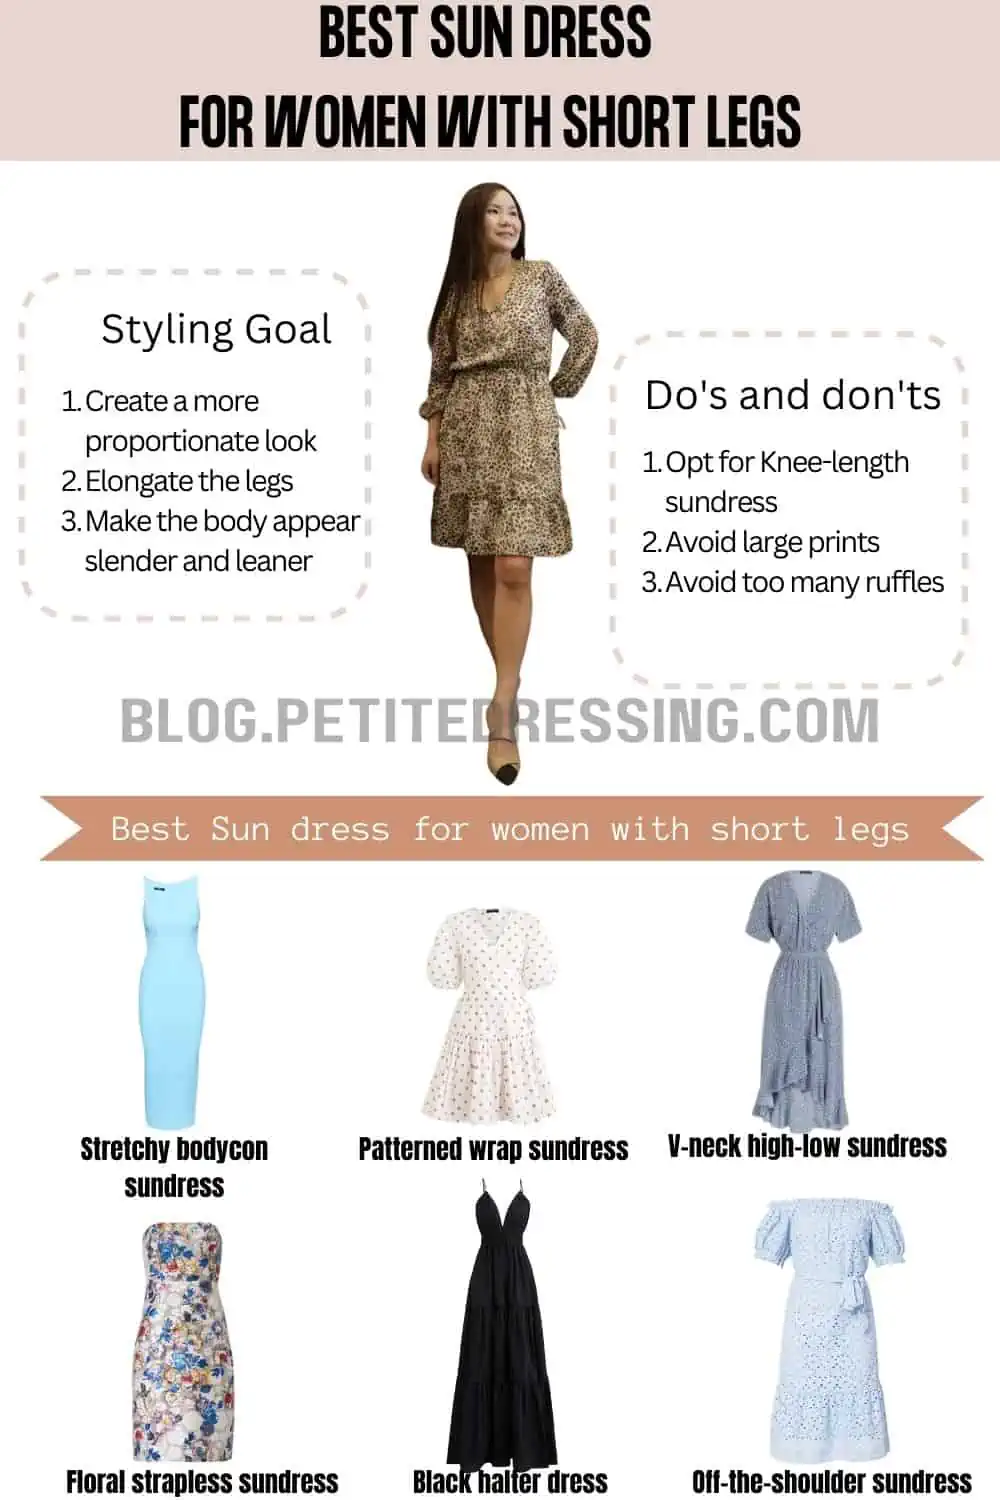 Sun dress guide for women with short legs - Petite Dressing